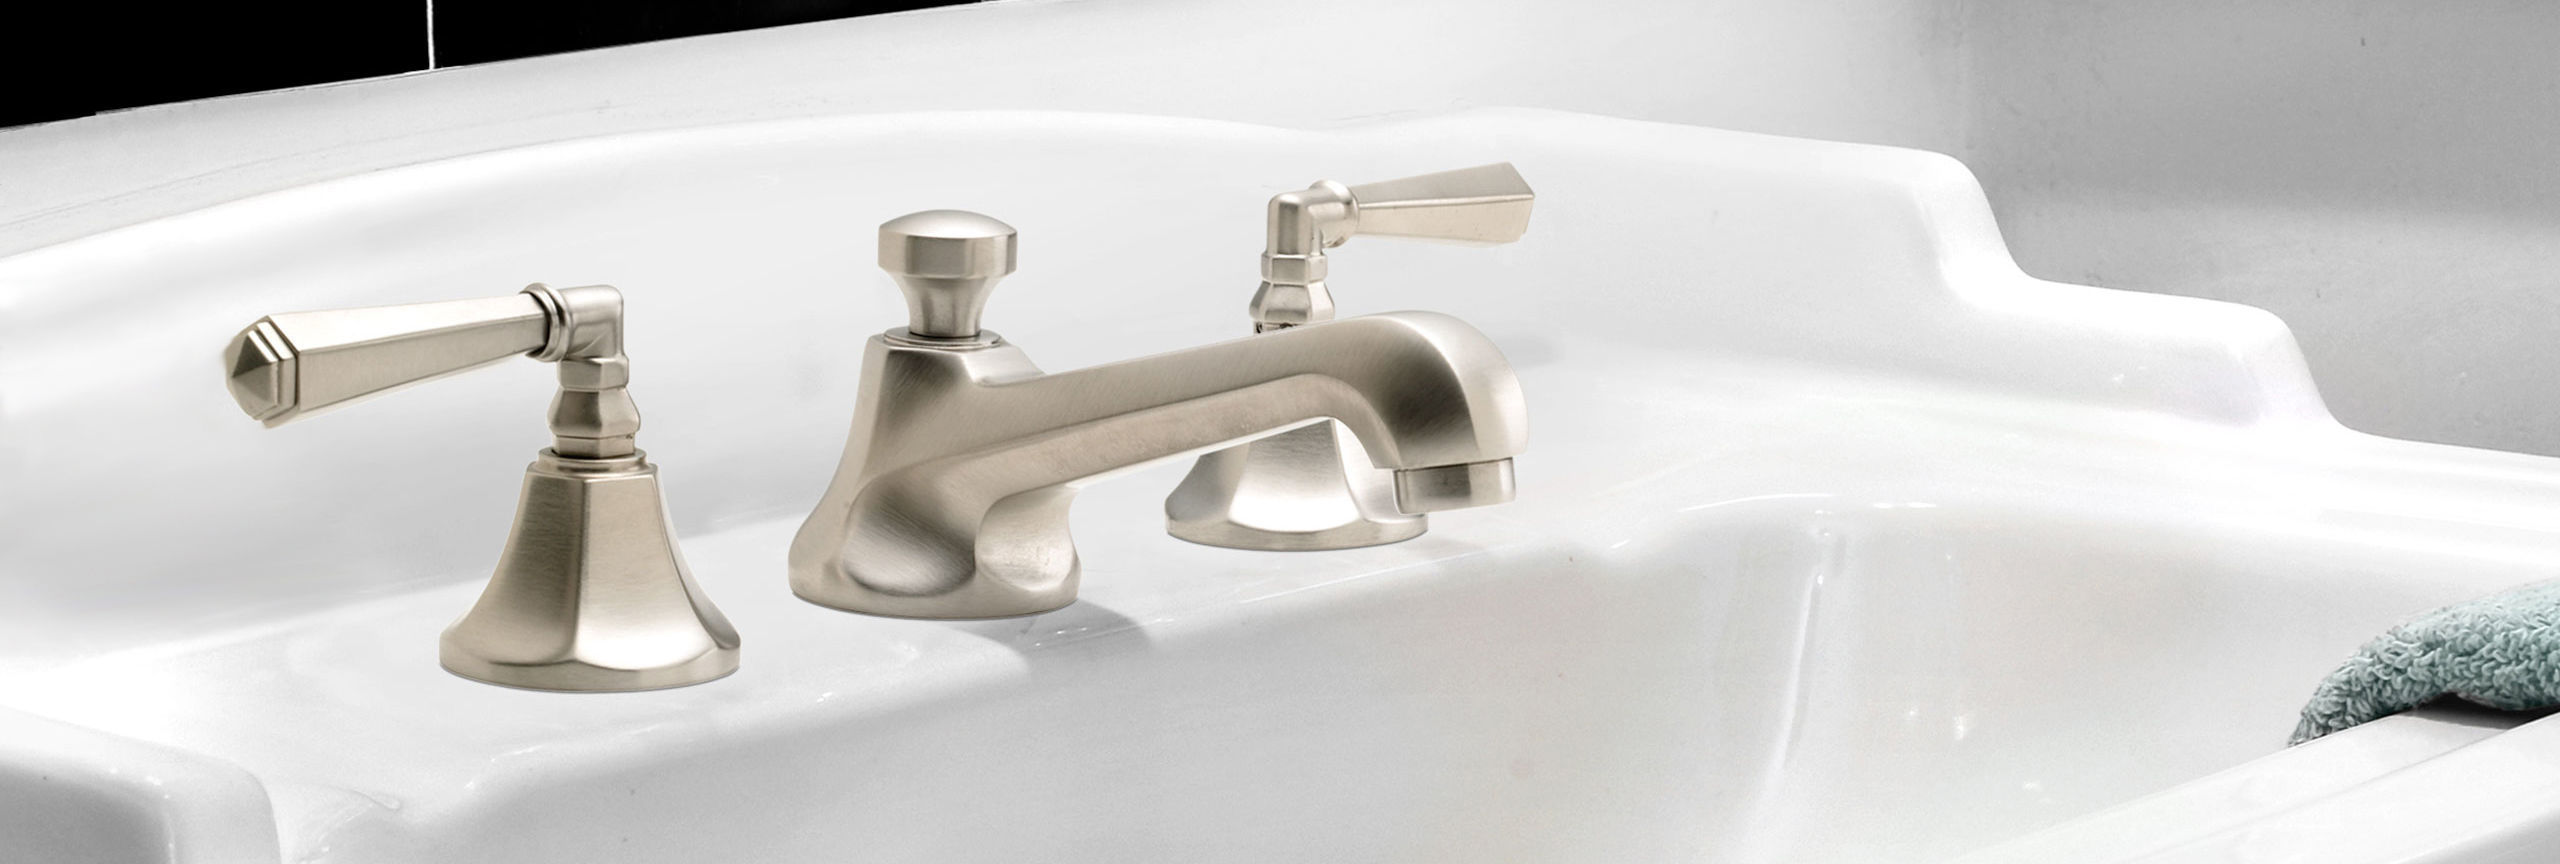 Bathroom series monterey widespread faucet on sink